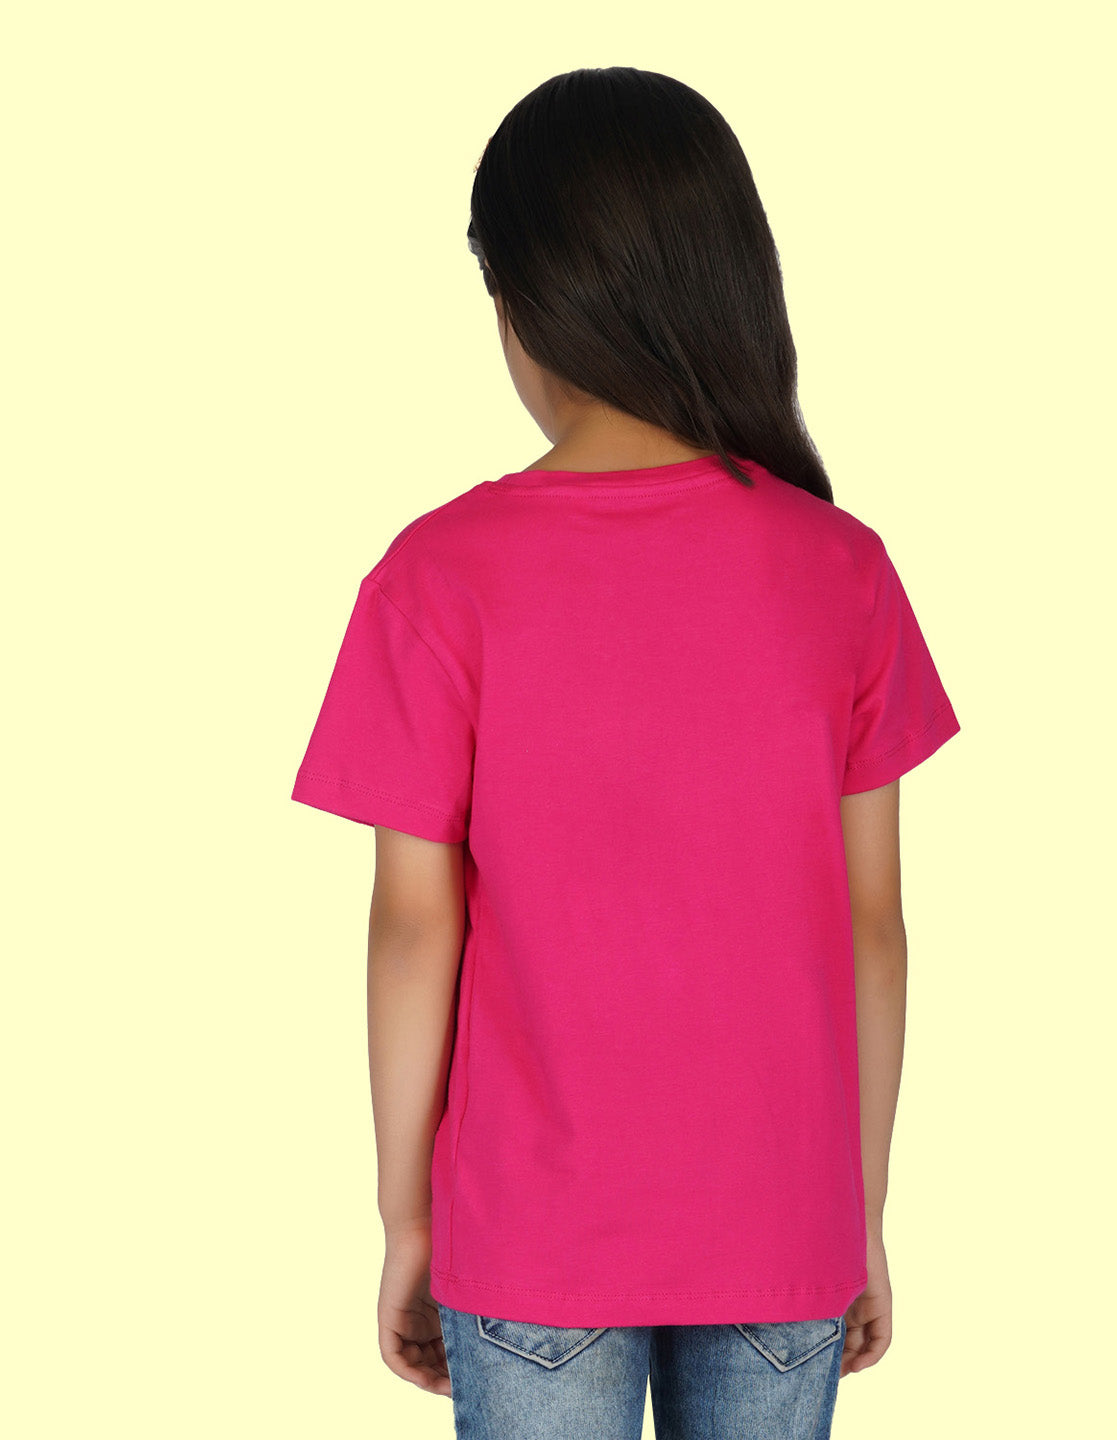 Nusyl Girls Half Sleeves Pink Cat printed T-shirt